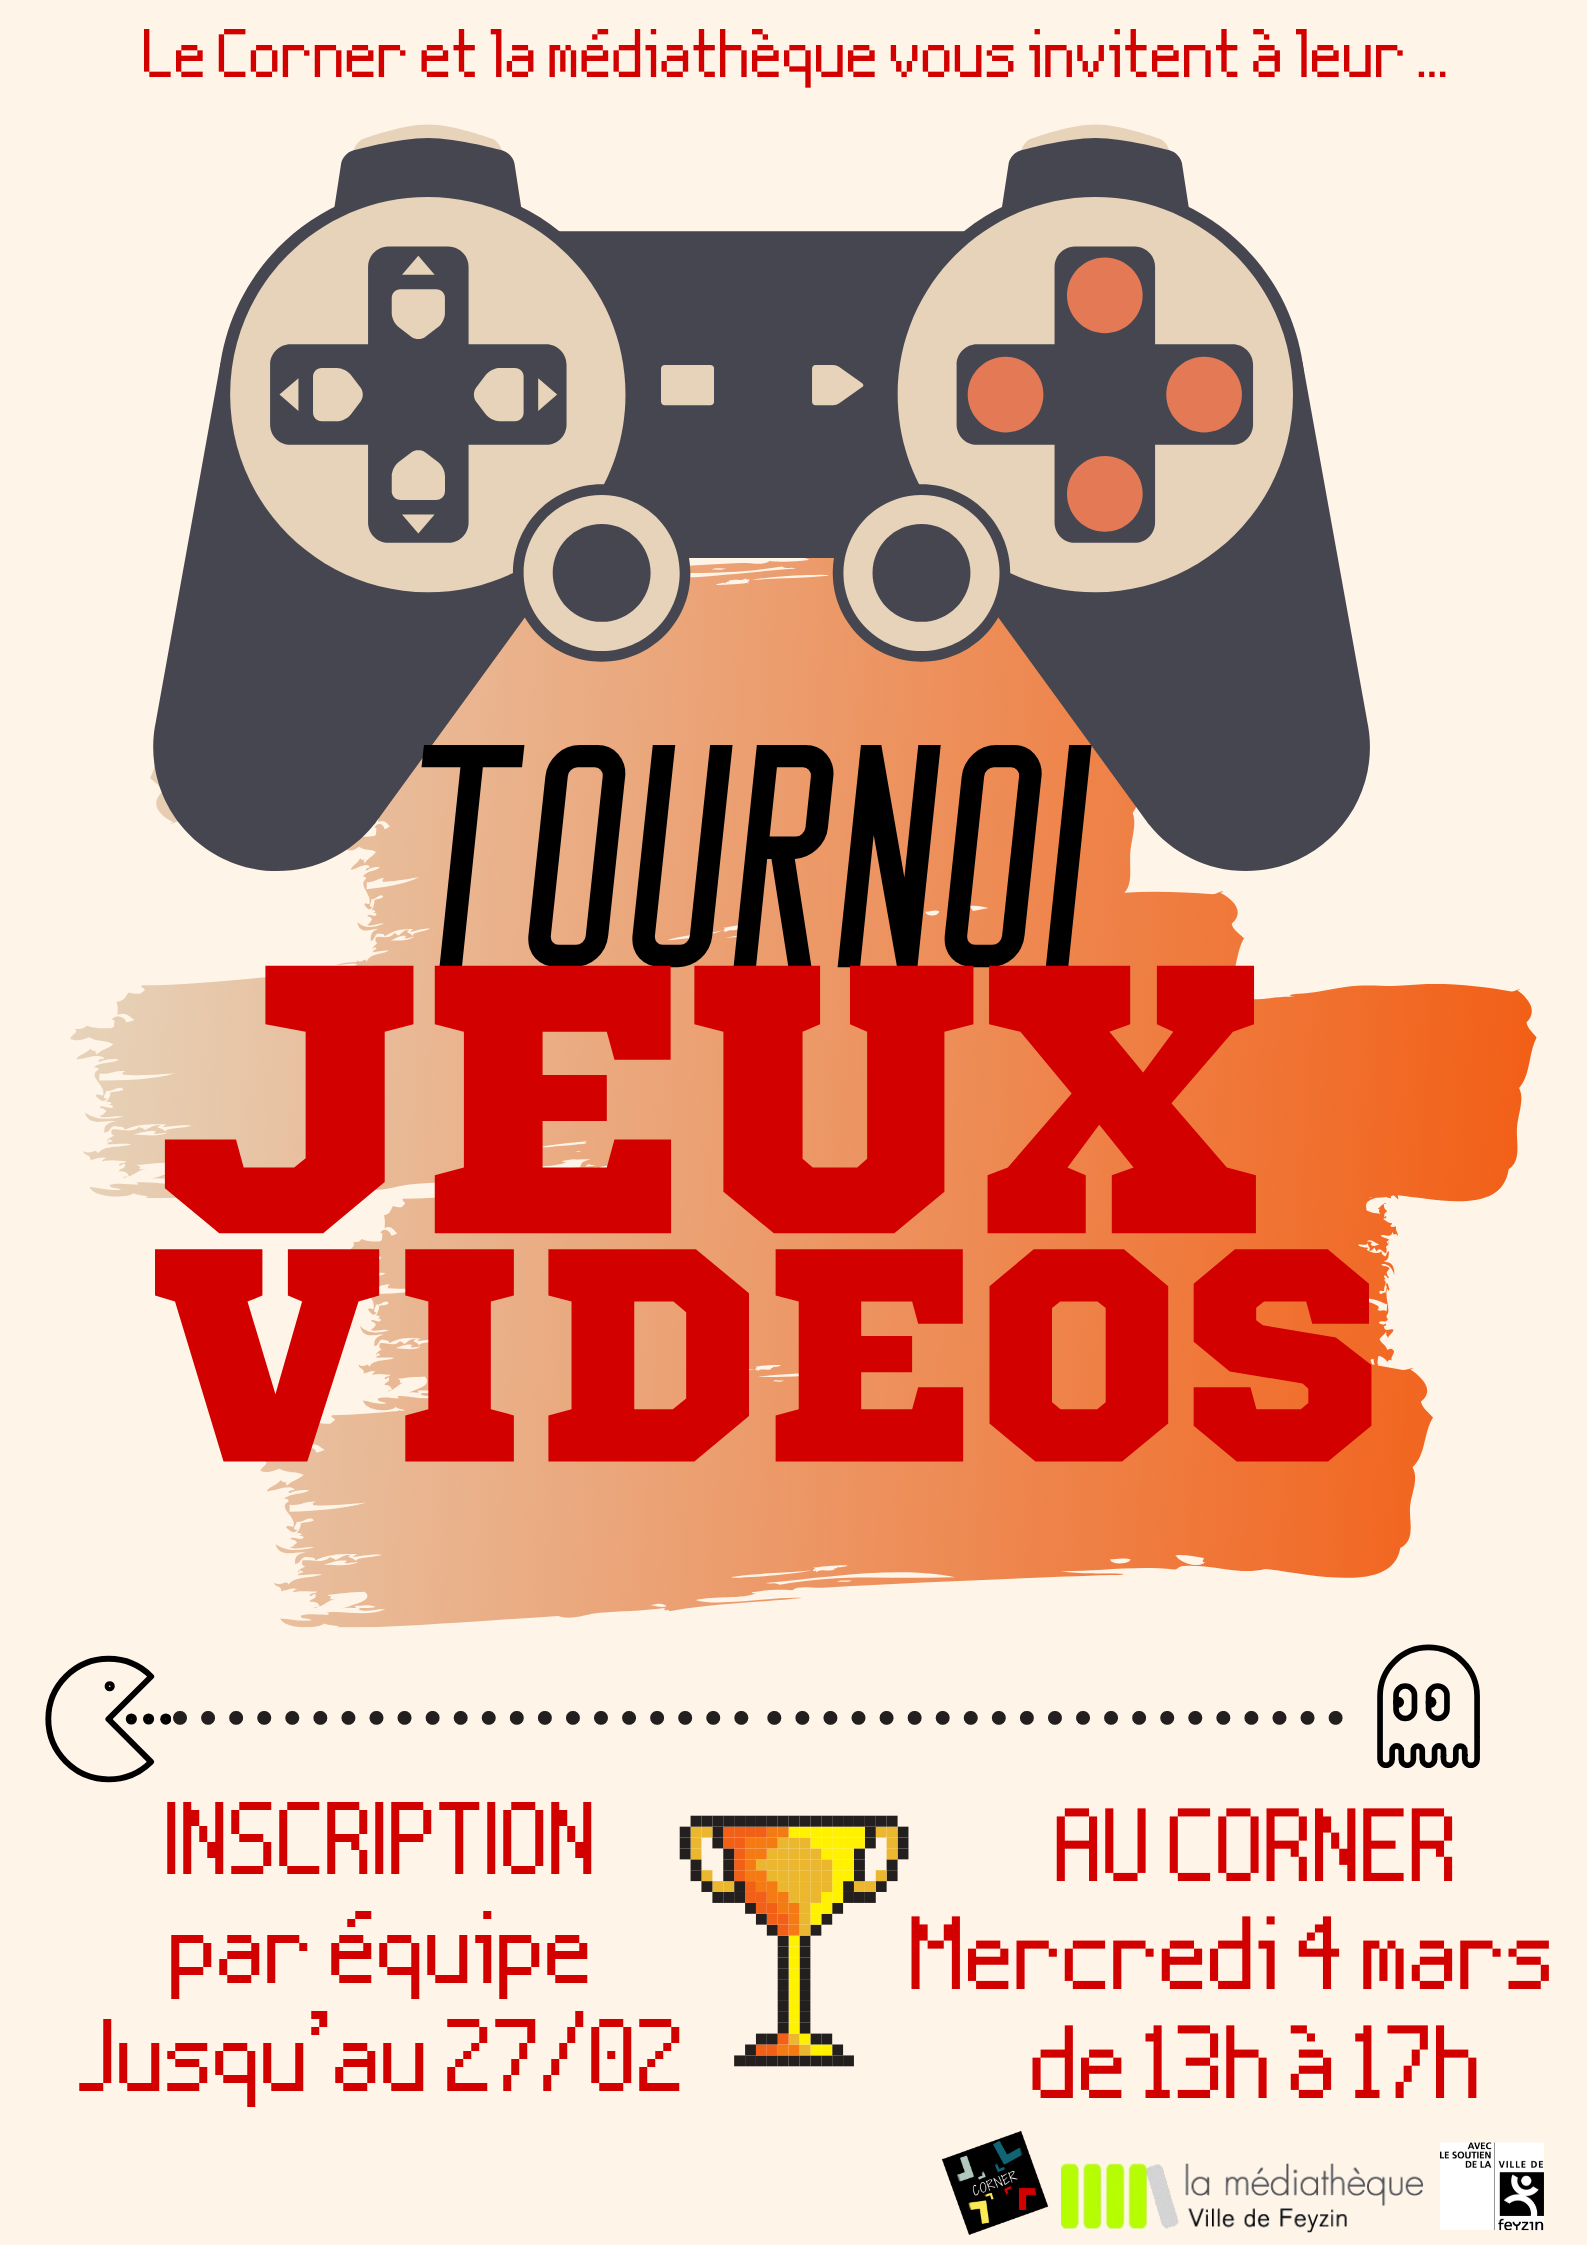 Corner tournoi jeux videos mars